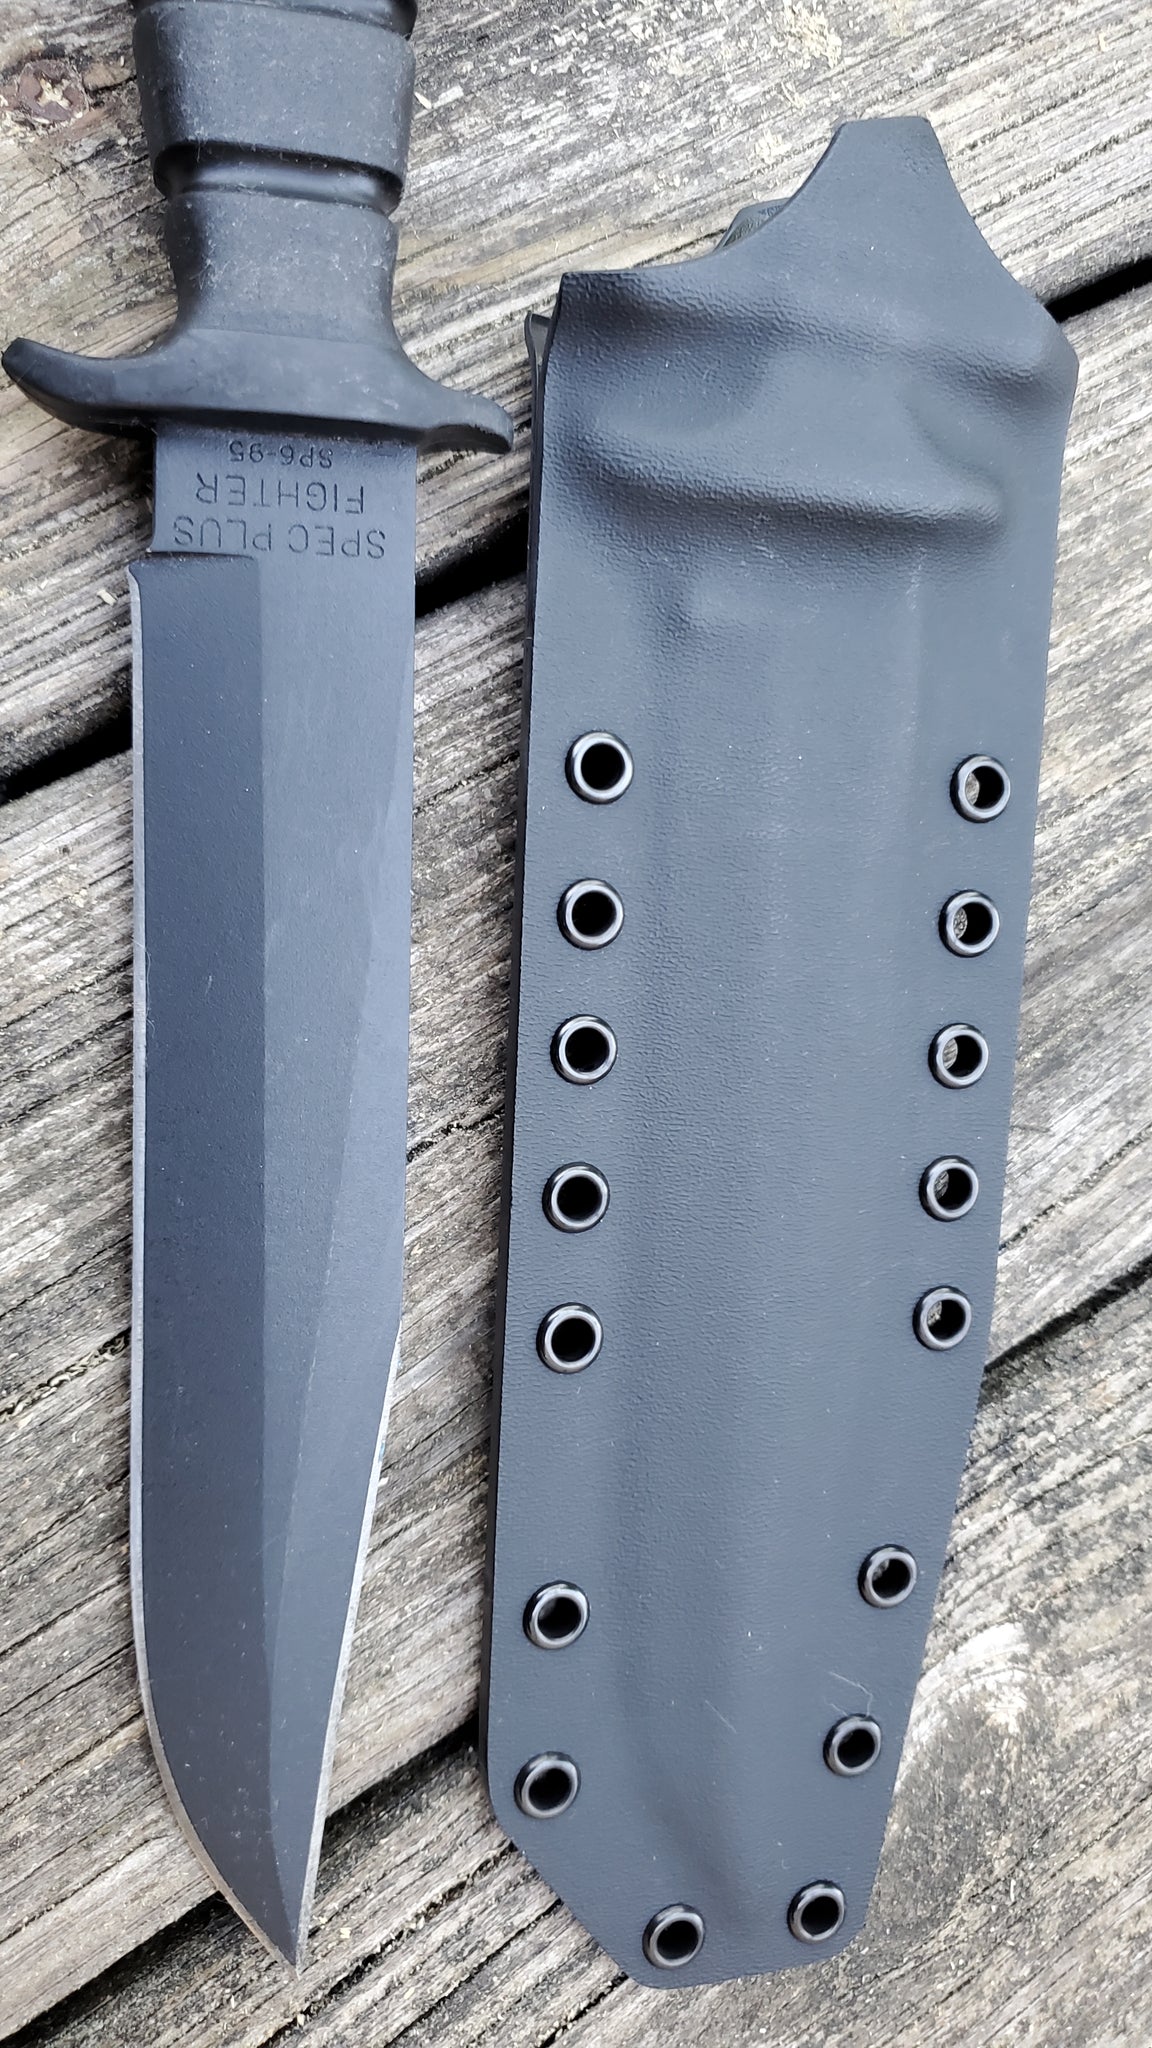 ONTARIO KNIFE COMPANY SPEC PLUS "SP6-95" KNIFE KYDEX sheath